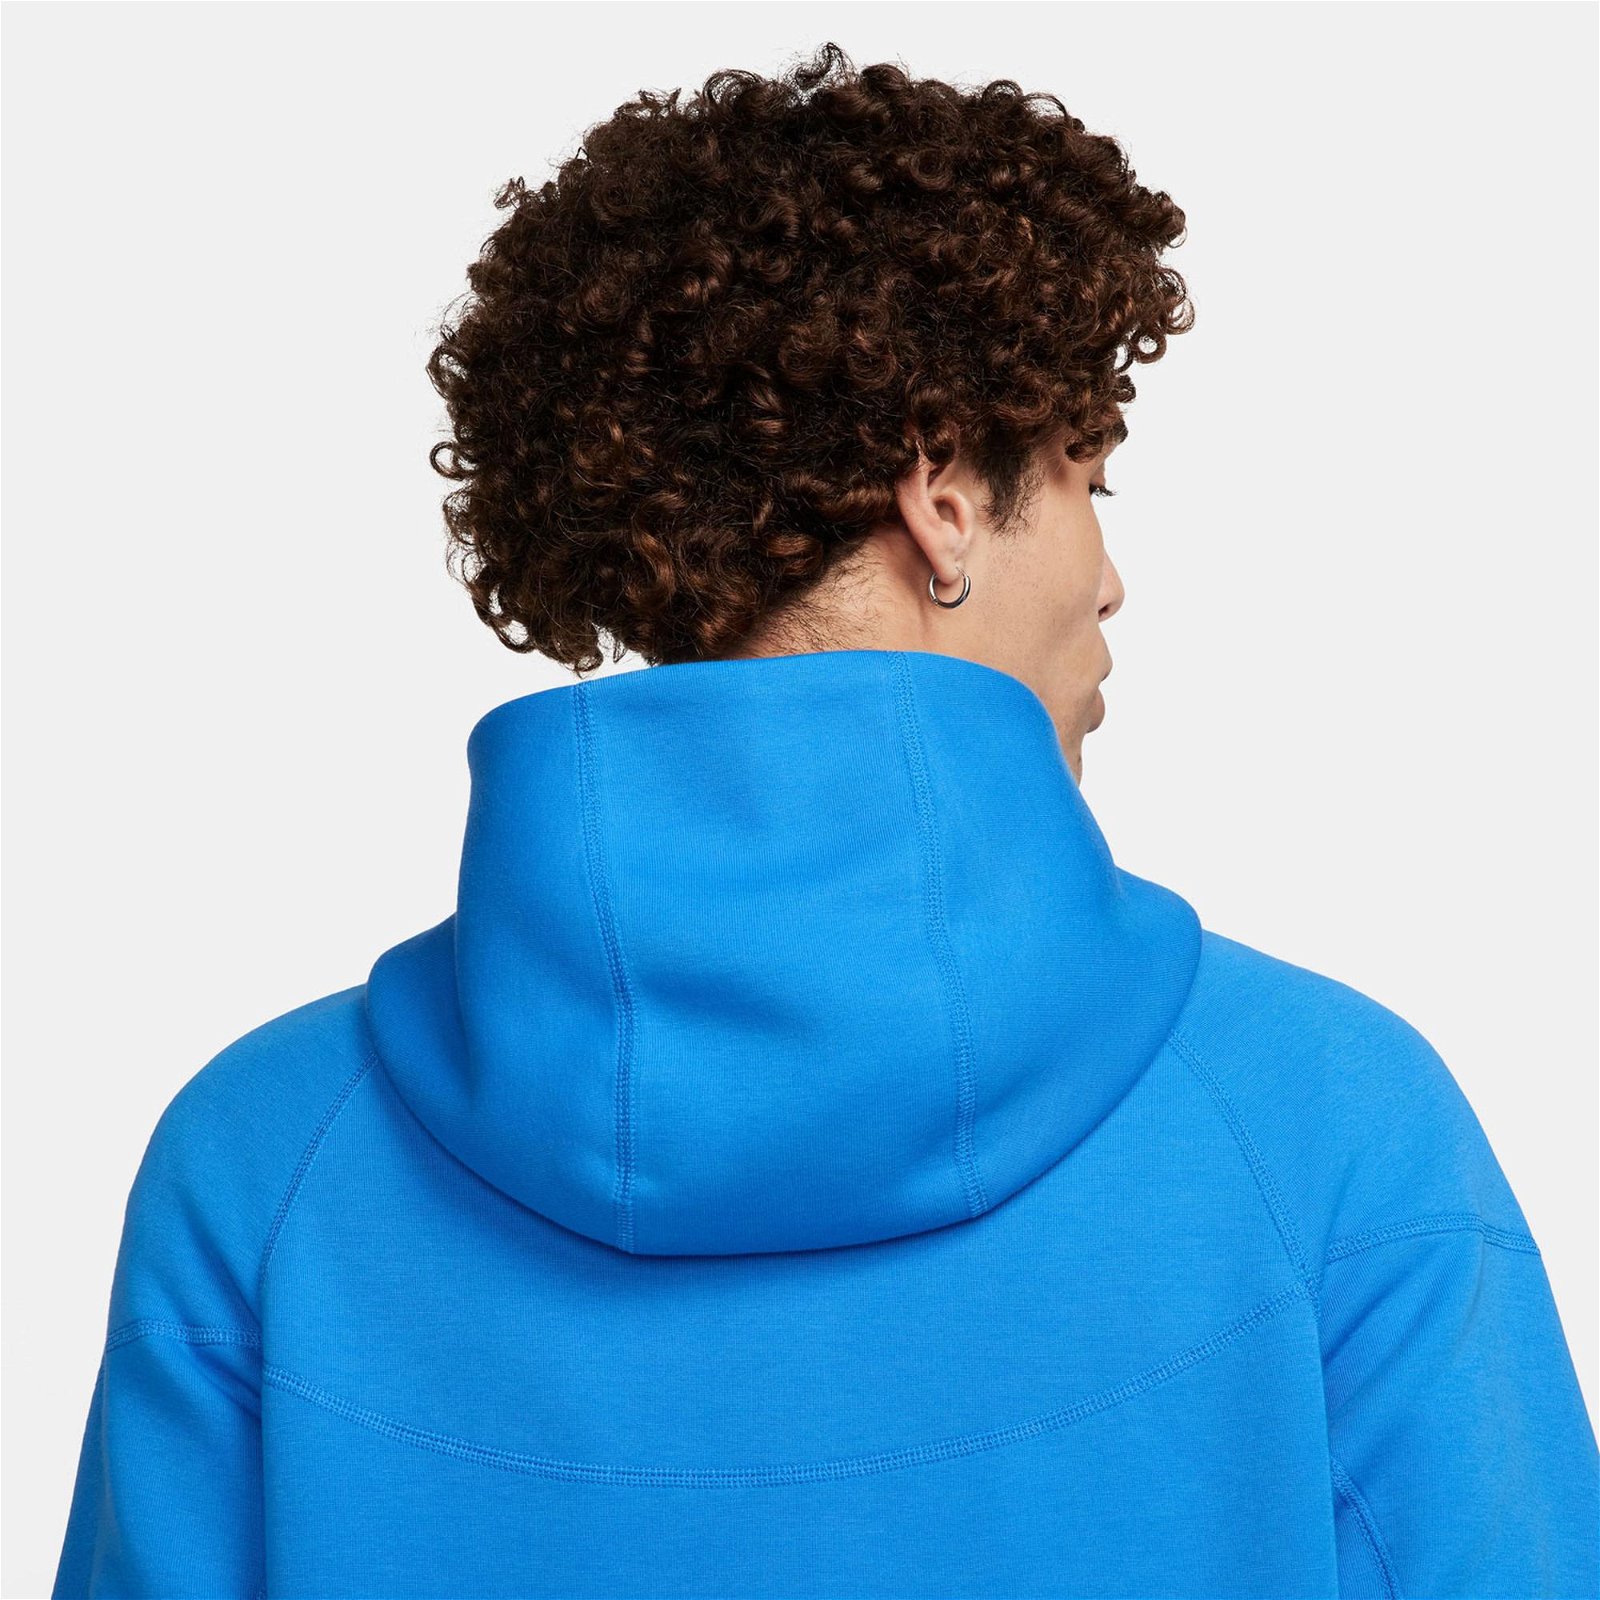 Nike Tech Fleece Erkek Mavi Sweatshirt